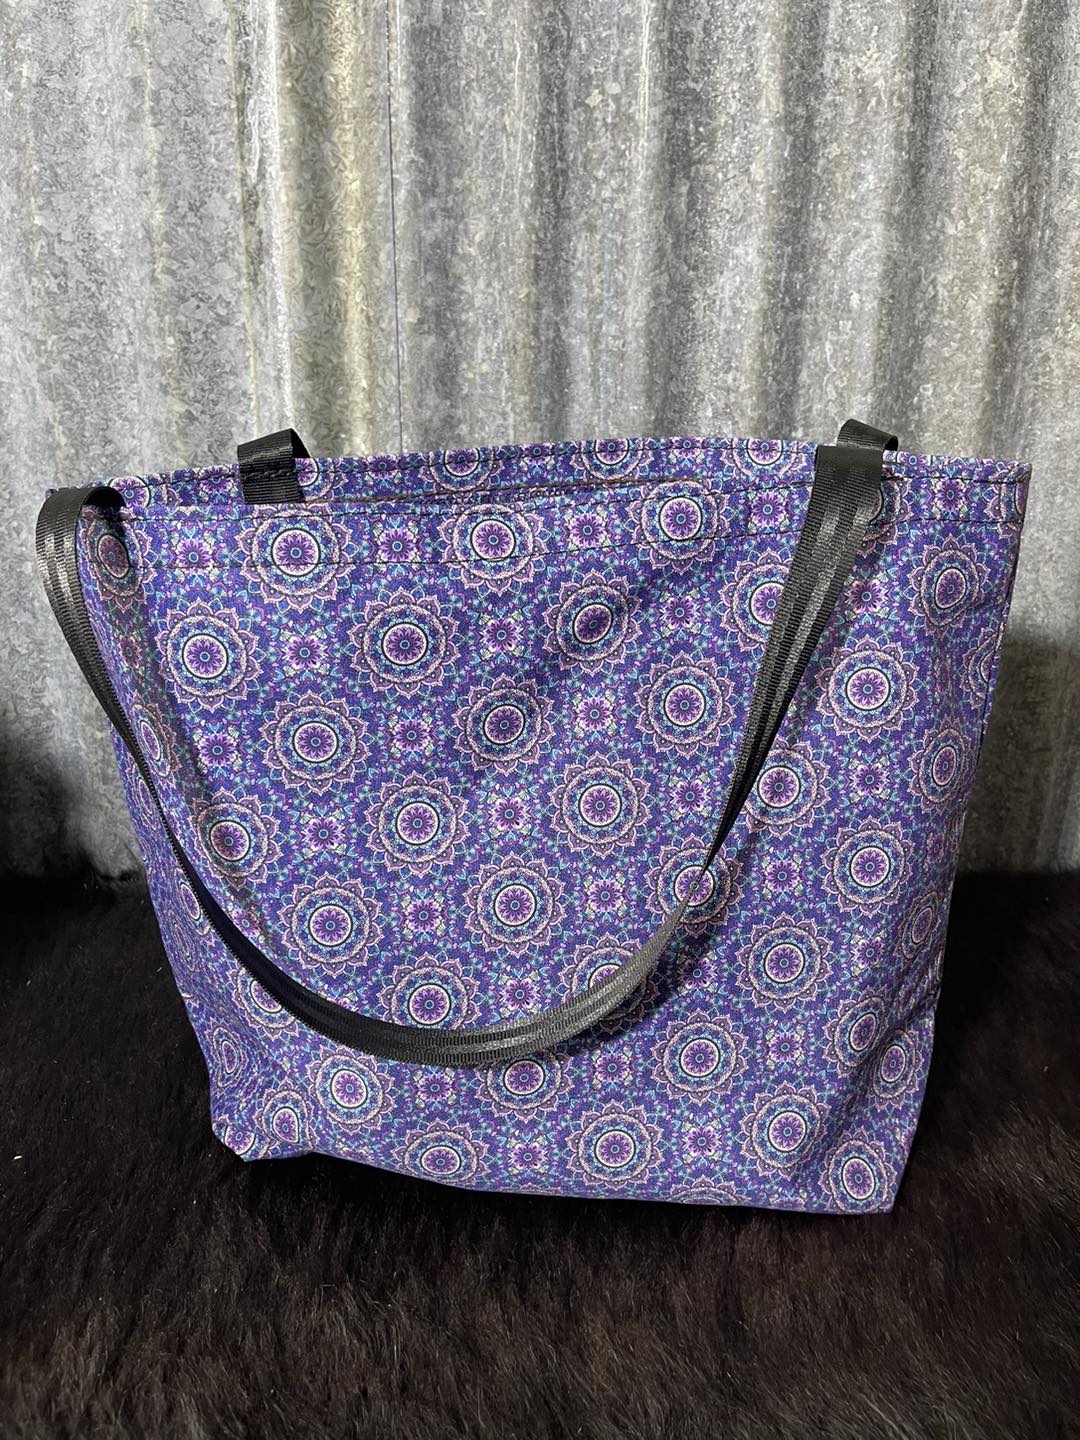 Ready made Fabric Shopping bag - Mandala